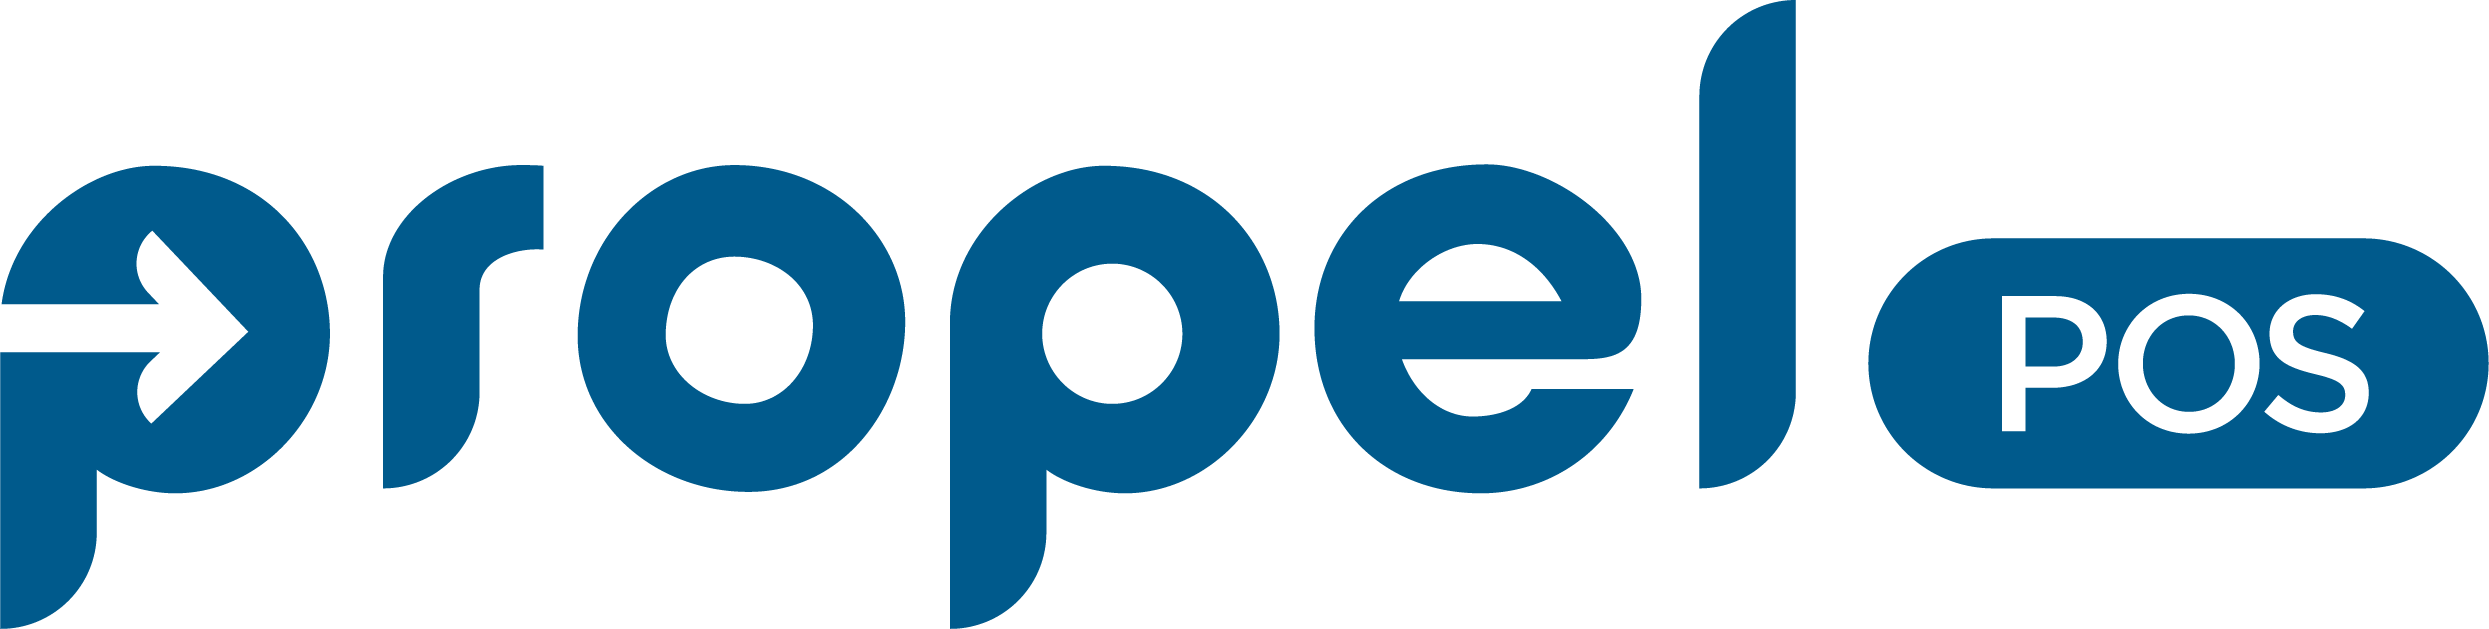 Propel POS logo